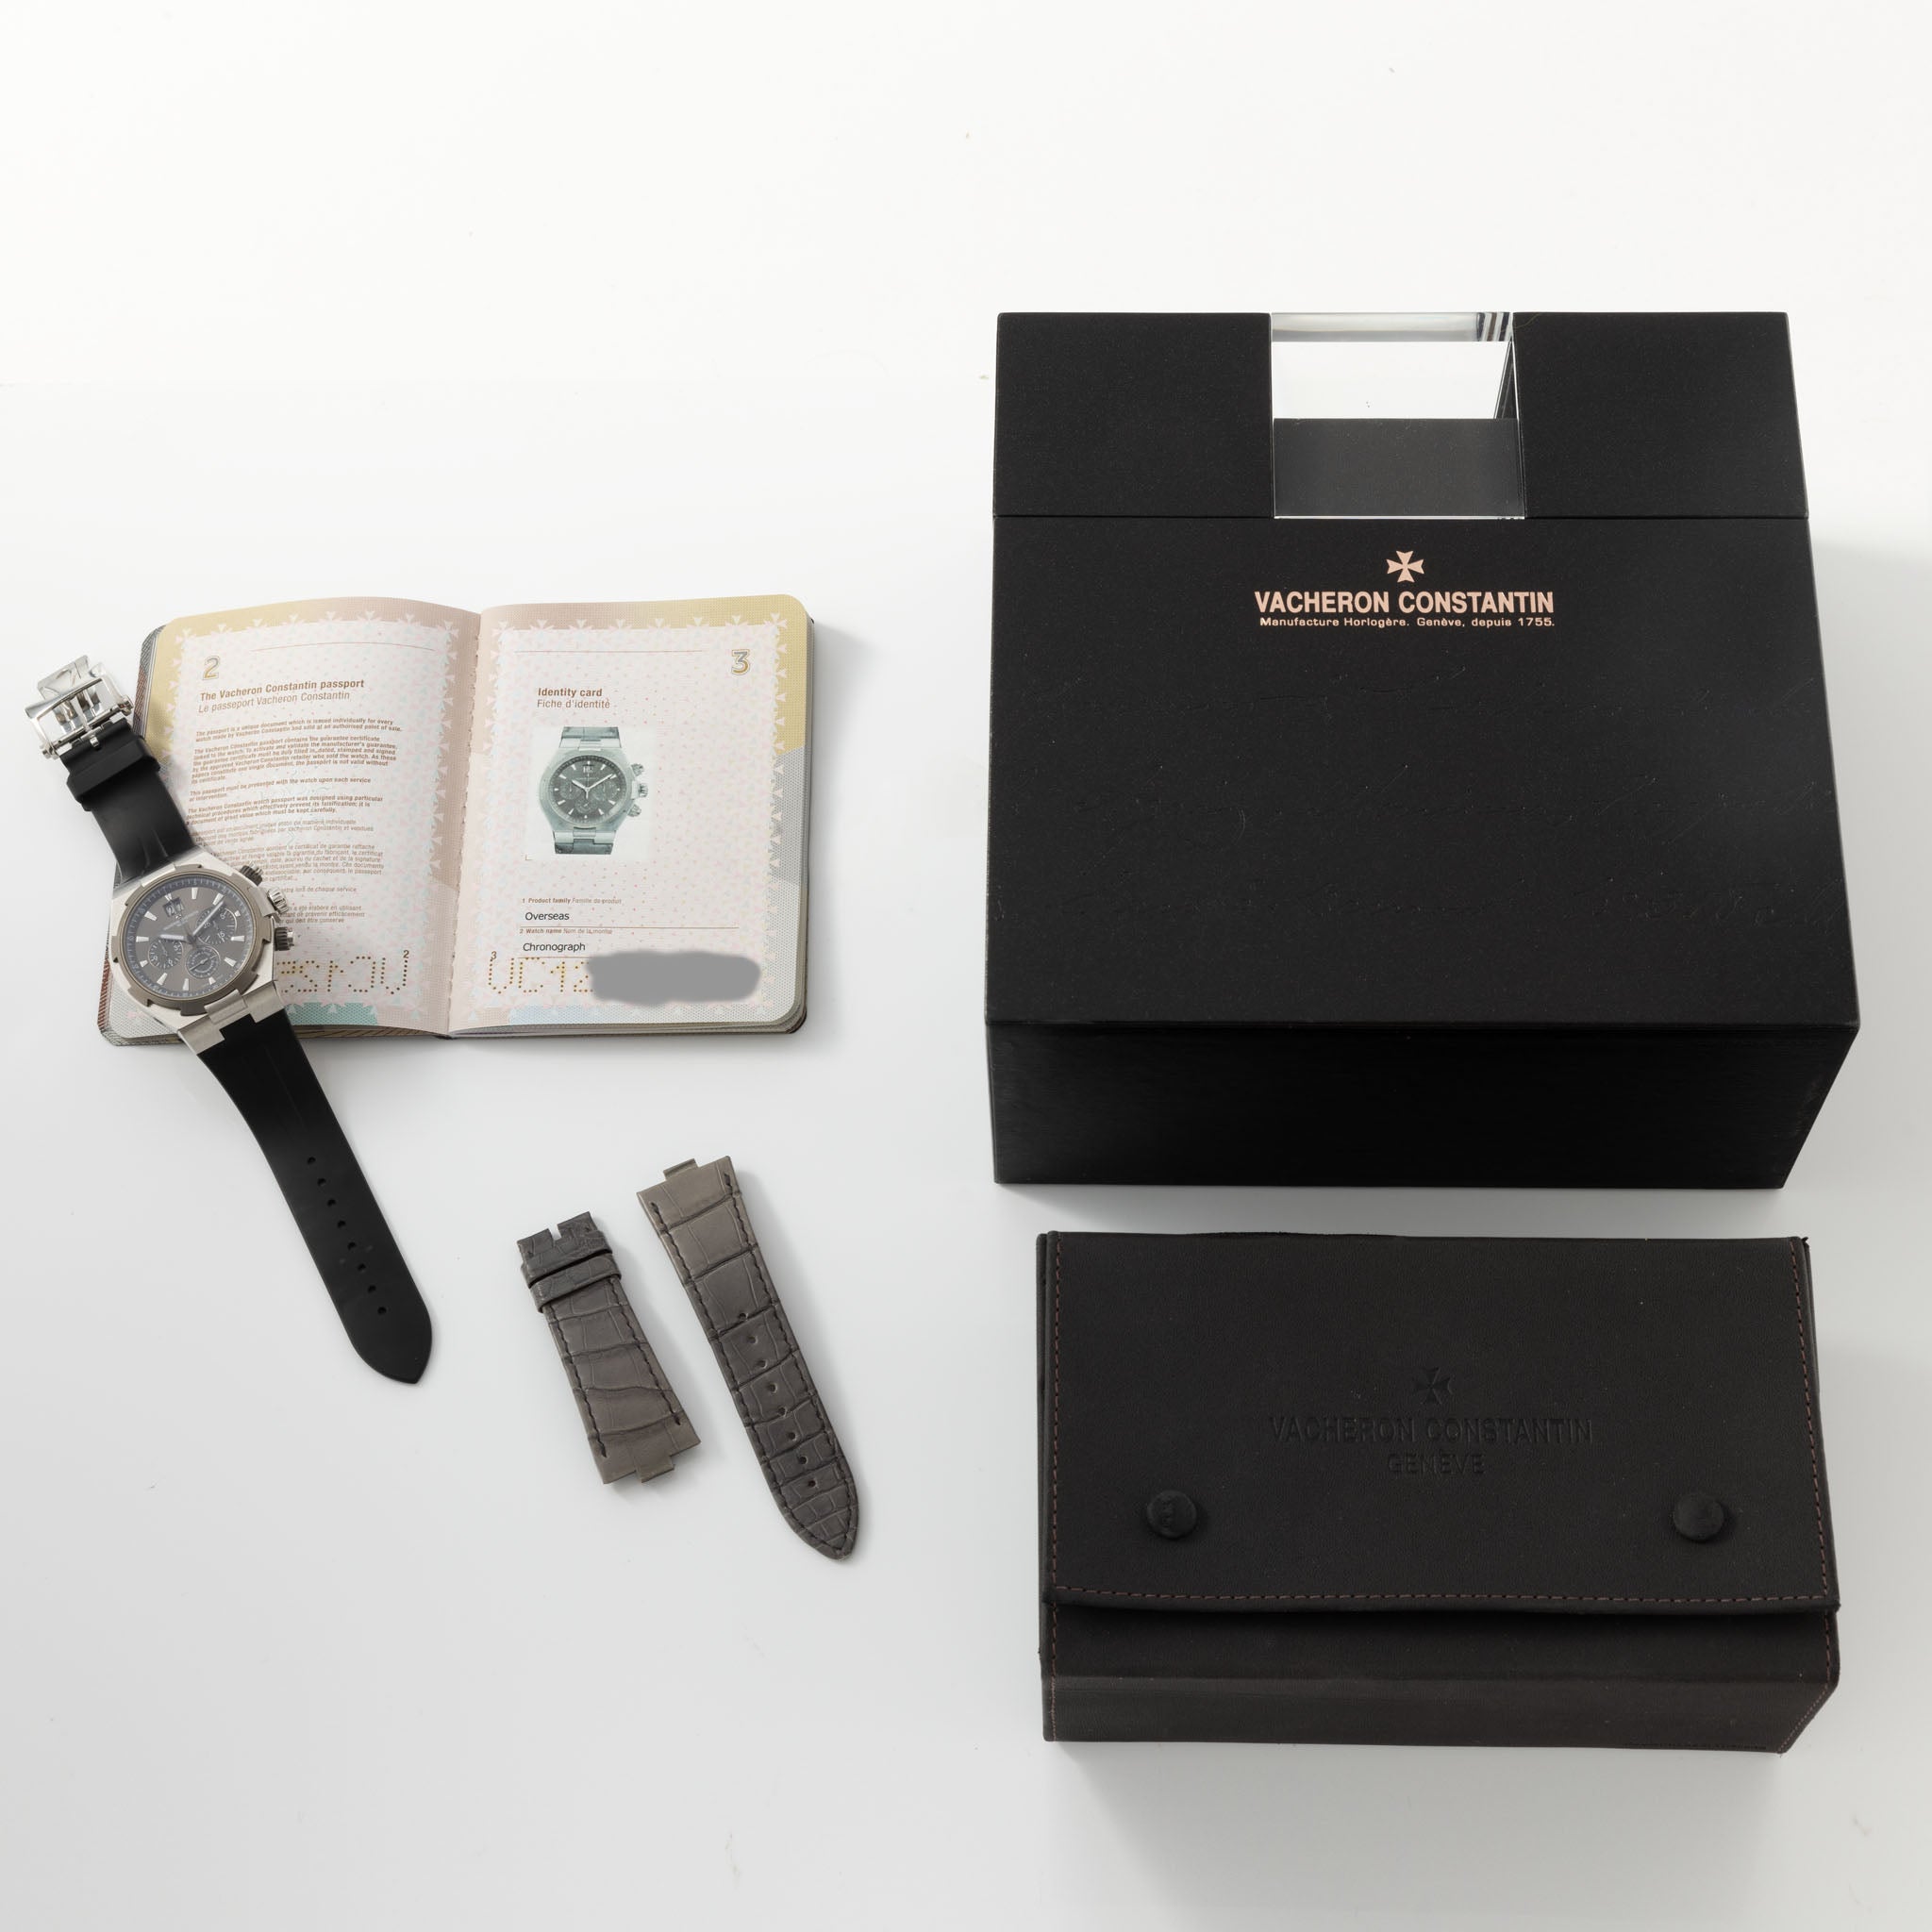 Vacheron Constantin Overseas “Deepstream” Chronograph Box and Papers Ref 49150/000w-9501